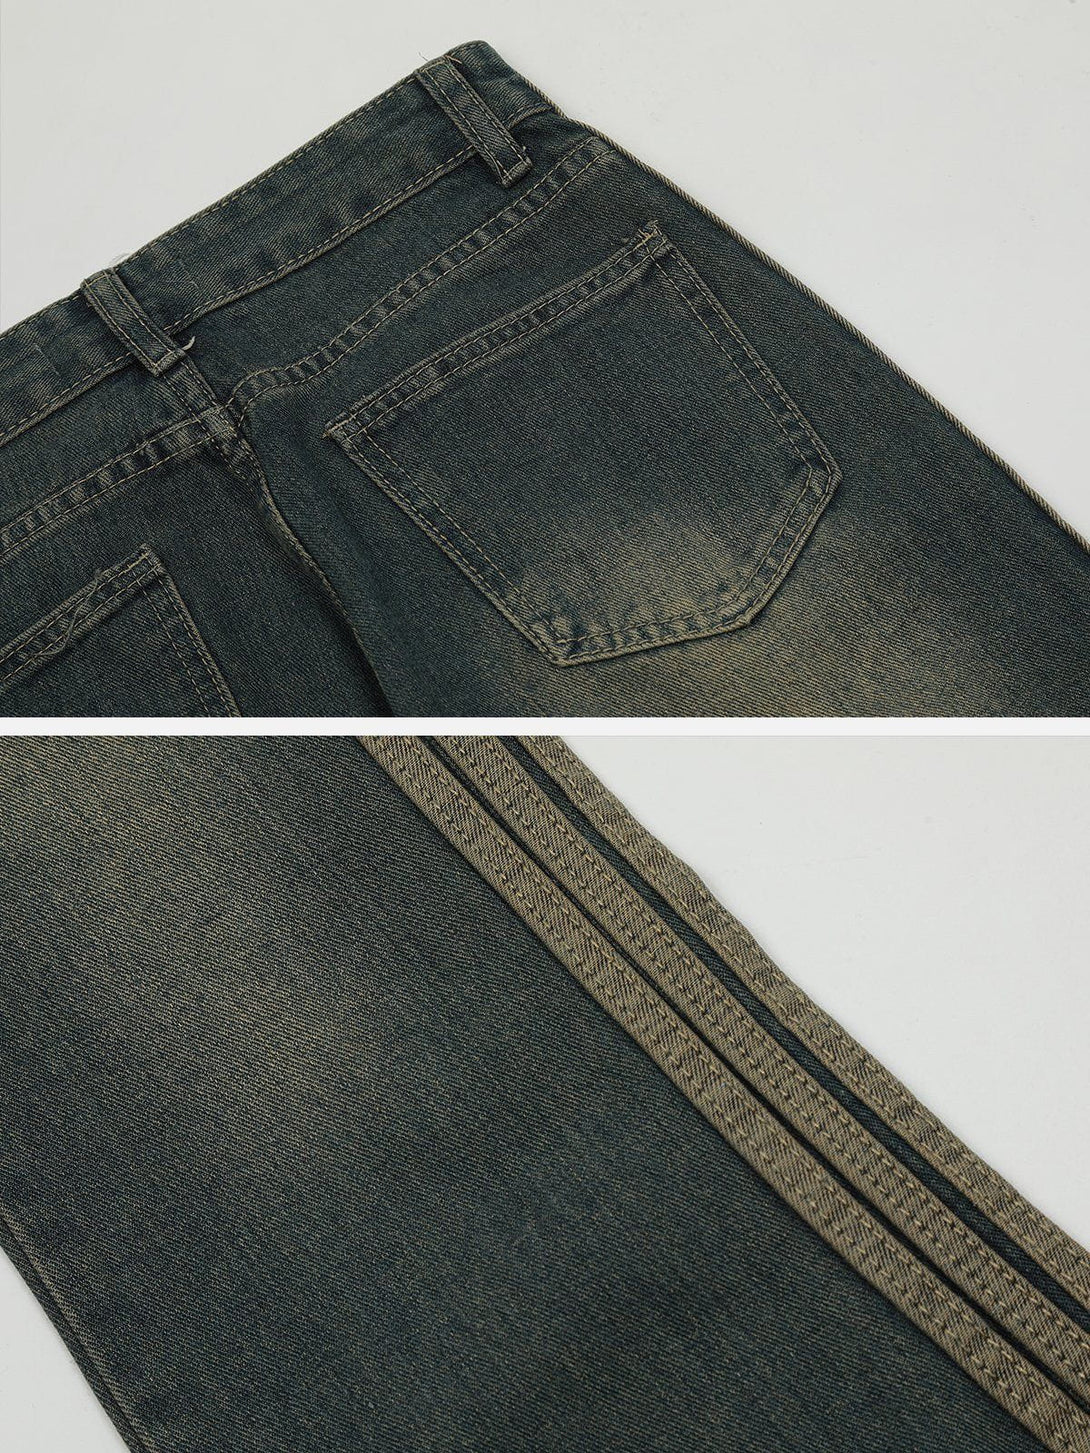 Levefly - Side Patchwork Jeans - Streetwear Fashion - levefly.com